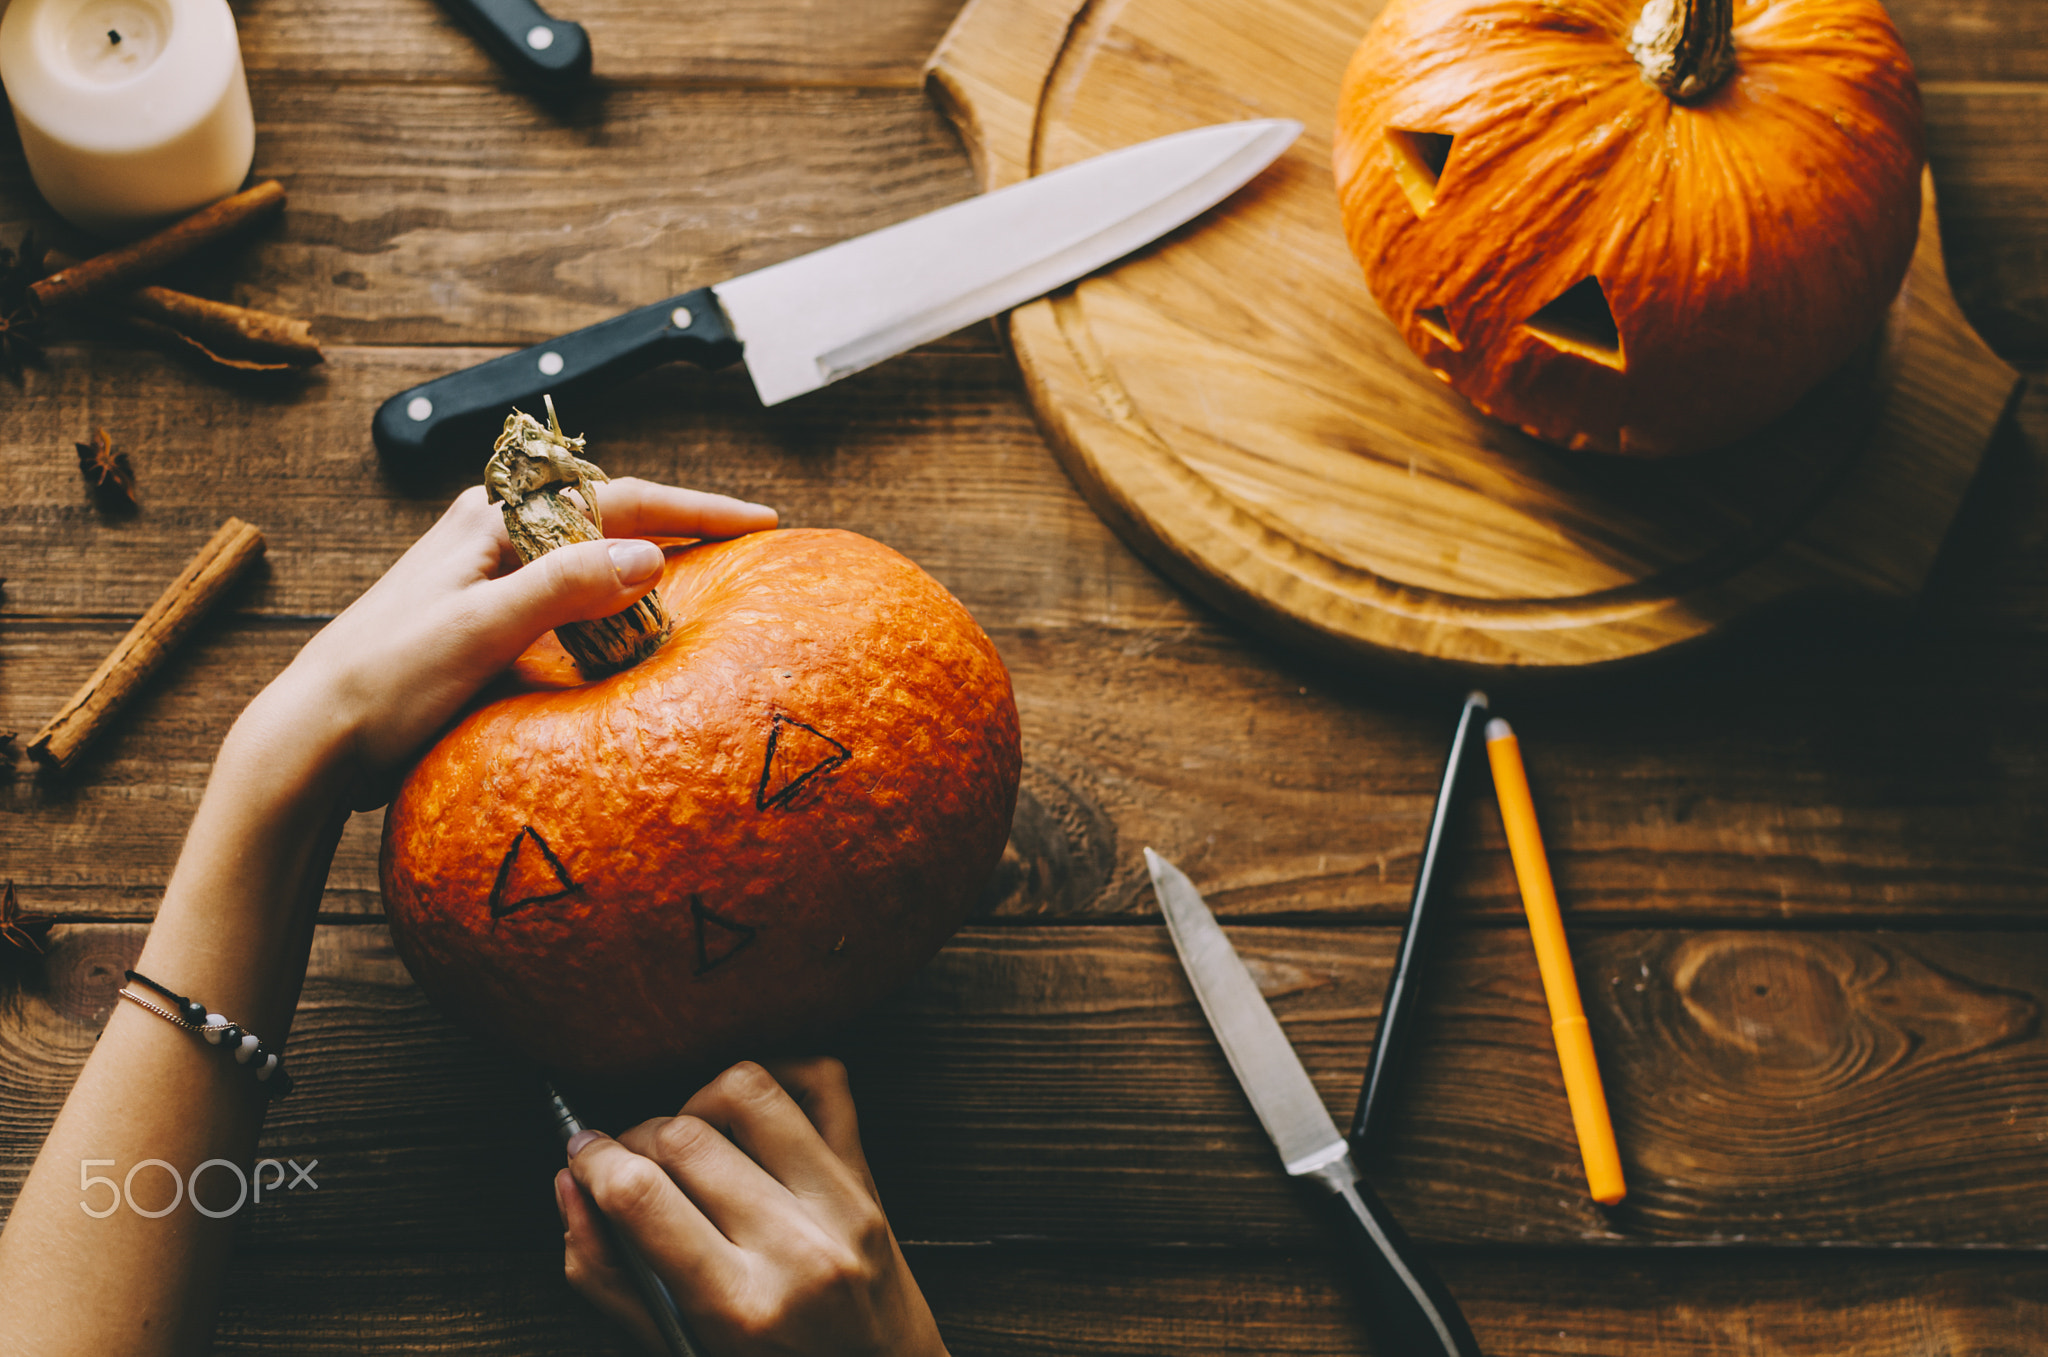 500px Valery Bond Halloween Pumpkin Knives 2048x1357